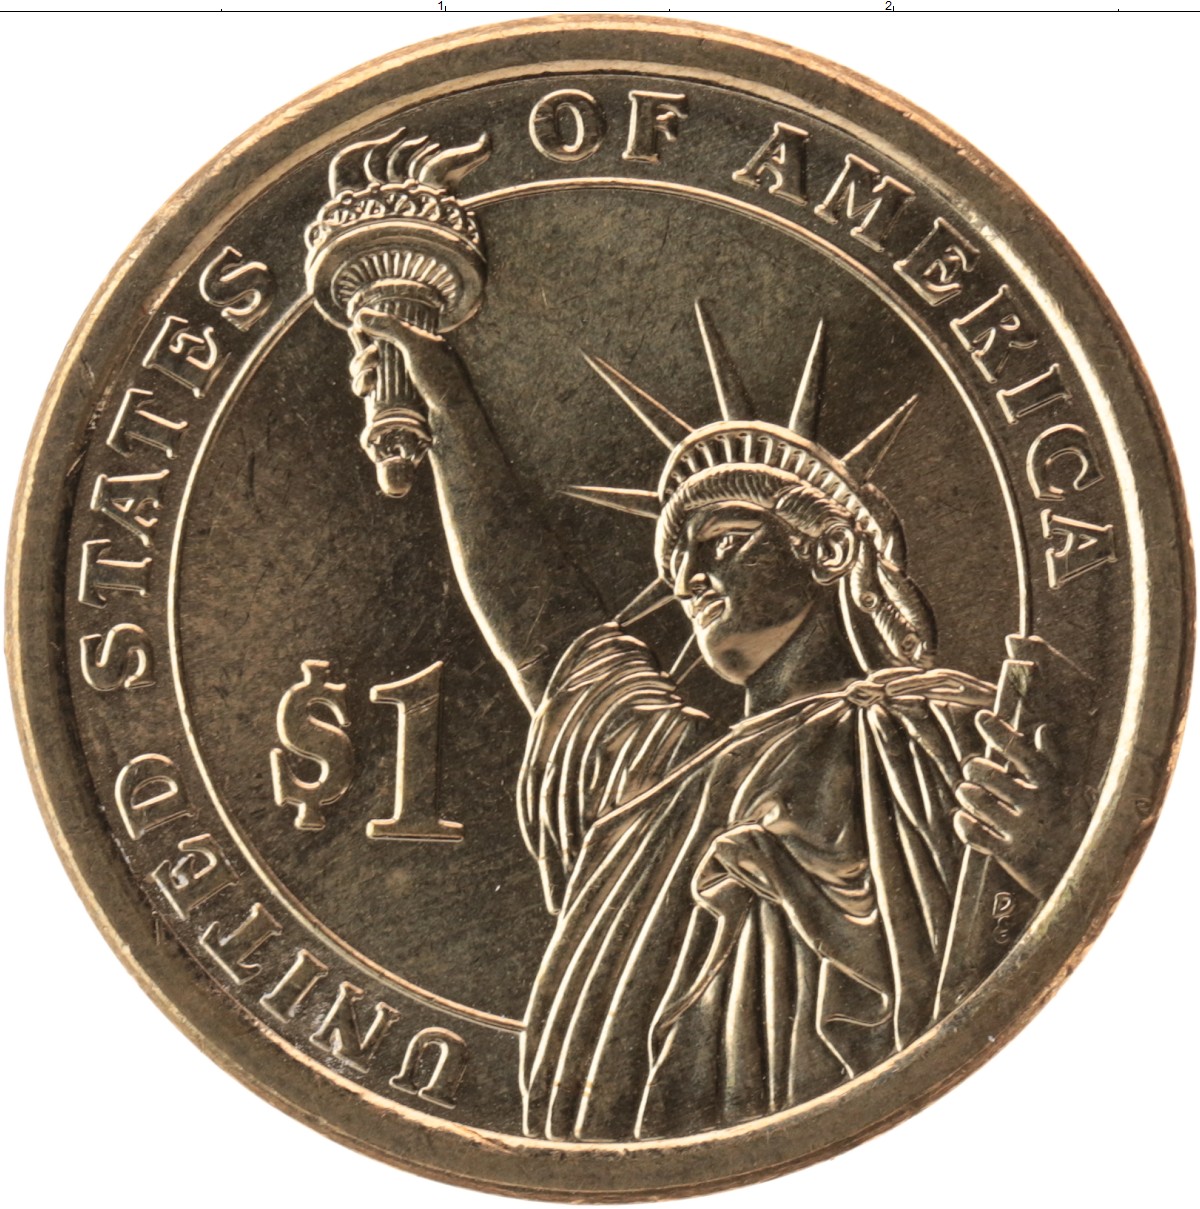 1 доллар работа. 1 Доллар. 1 Американский доллар монета. 1 Доллар изображение. Один Железный доллар.